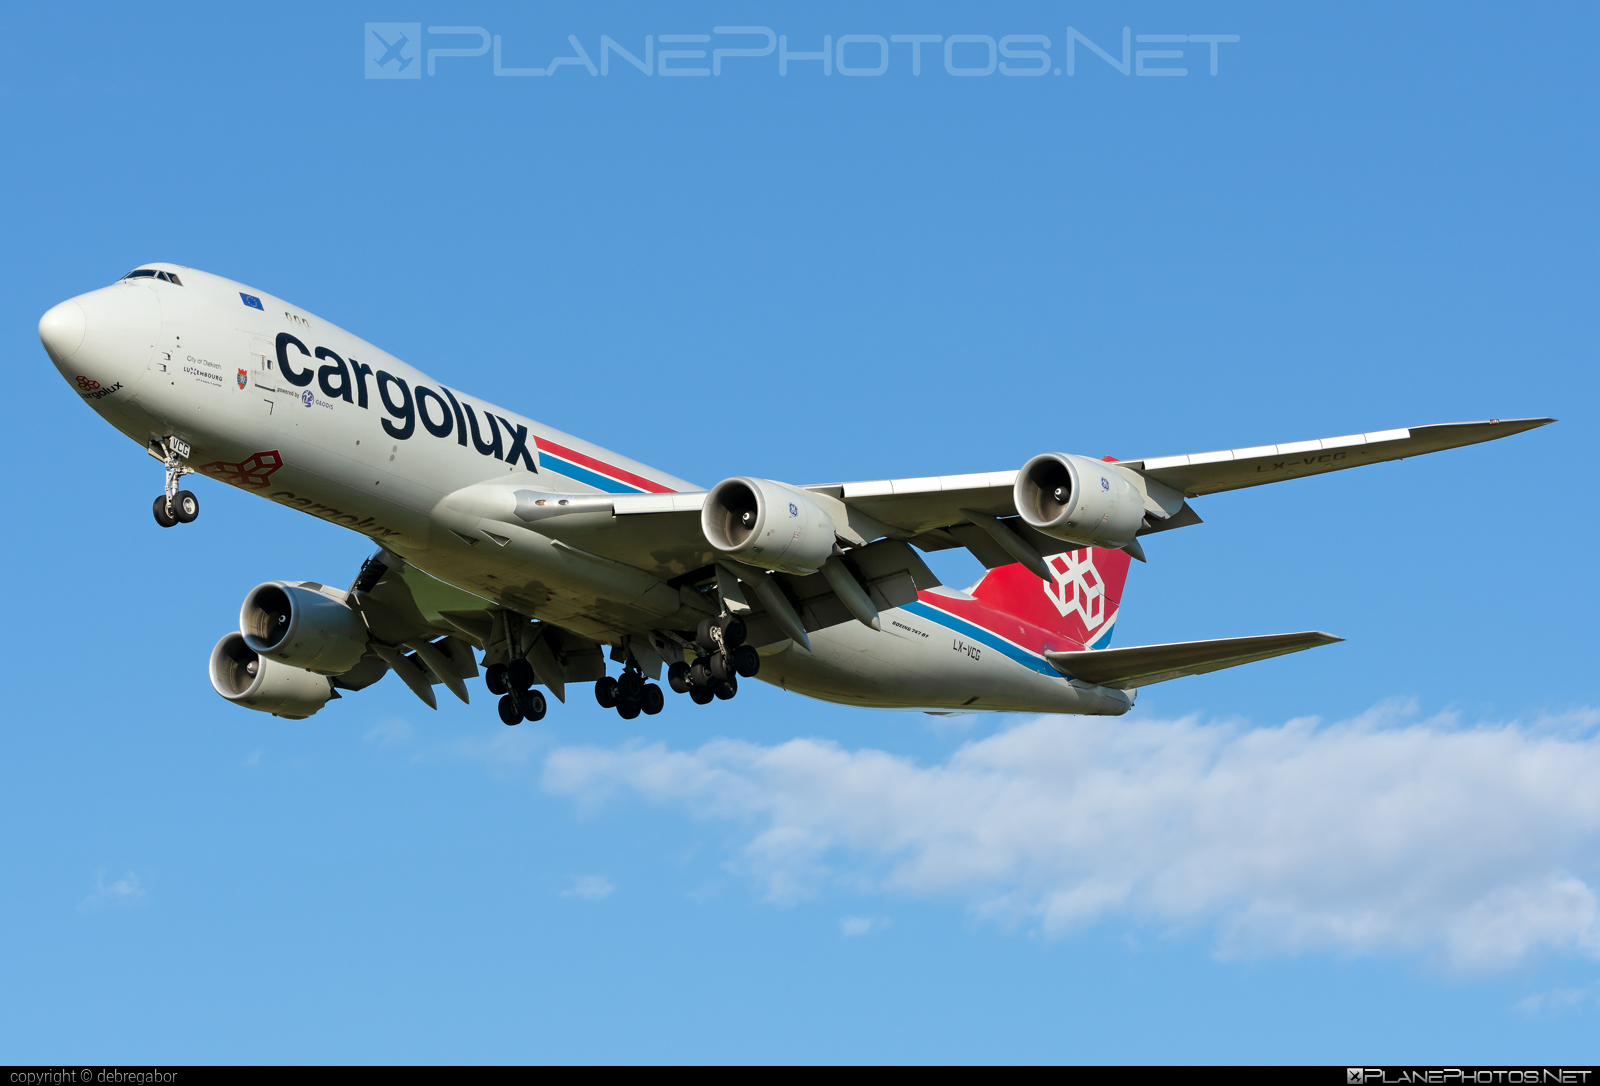 Boeing 747-8F - LX-VCG operated by Cargolux Airlines International #b747 #b747f #b747freighter #boeing #boeing747 #cargolux #jumbo